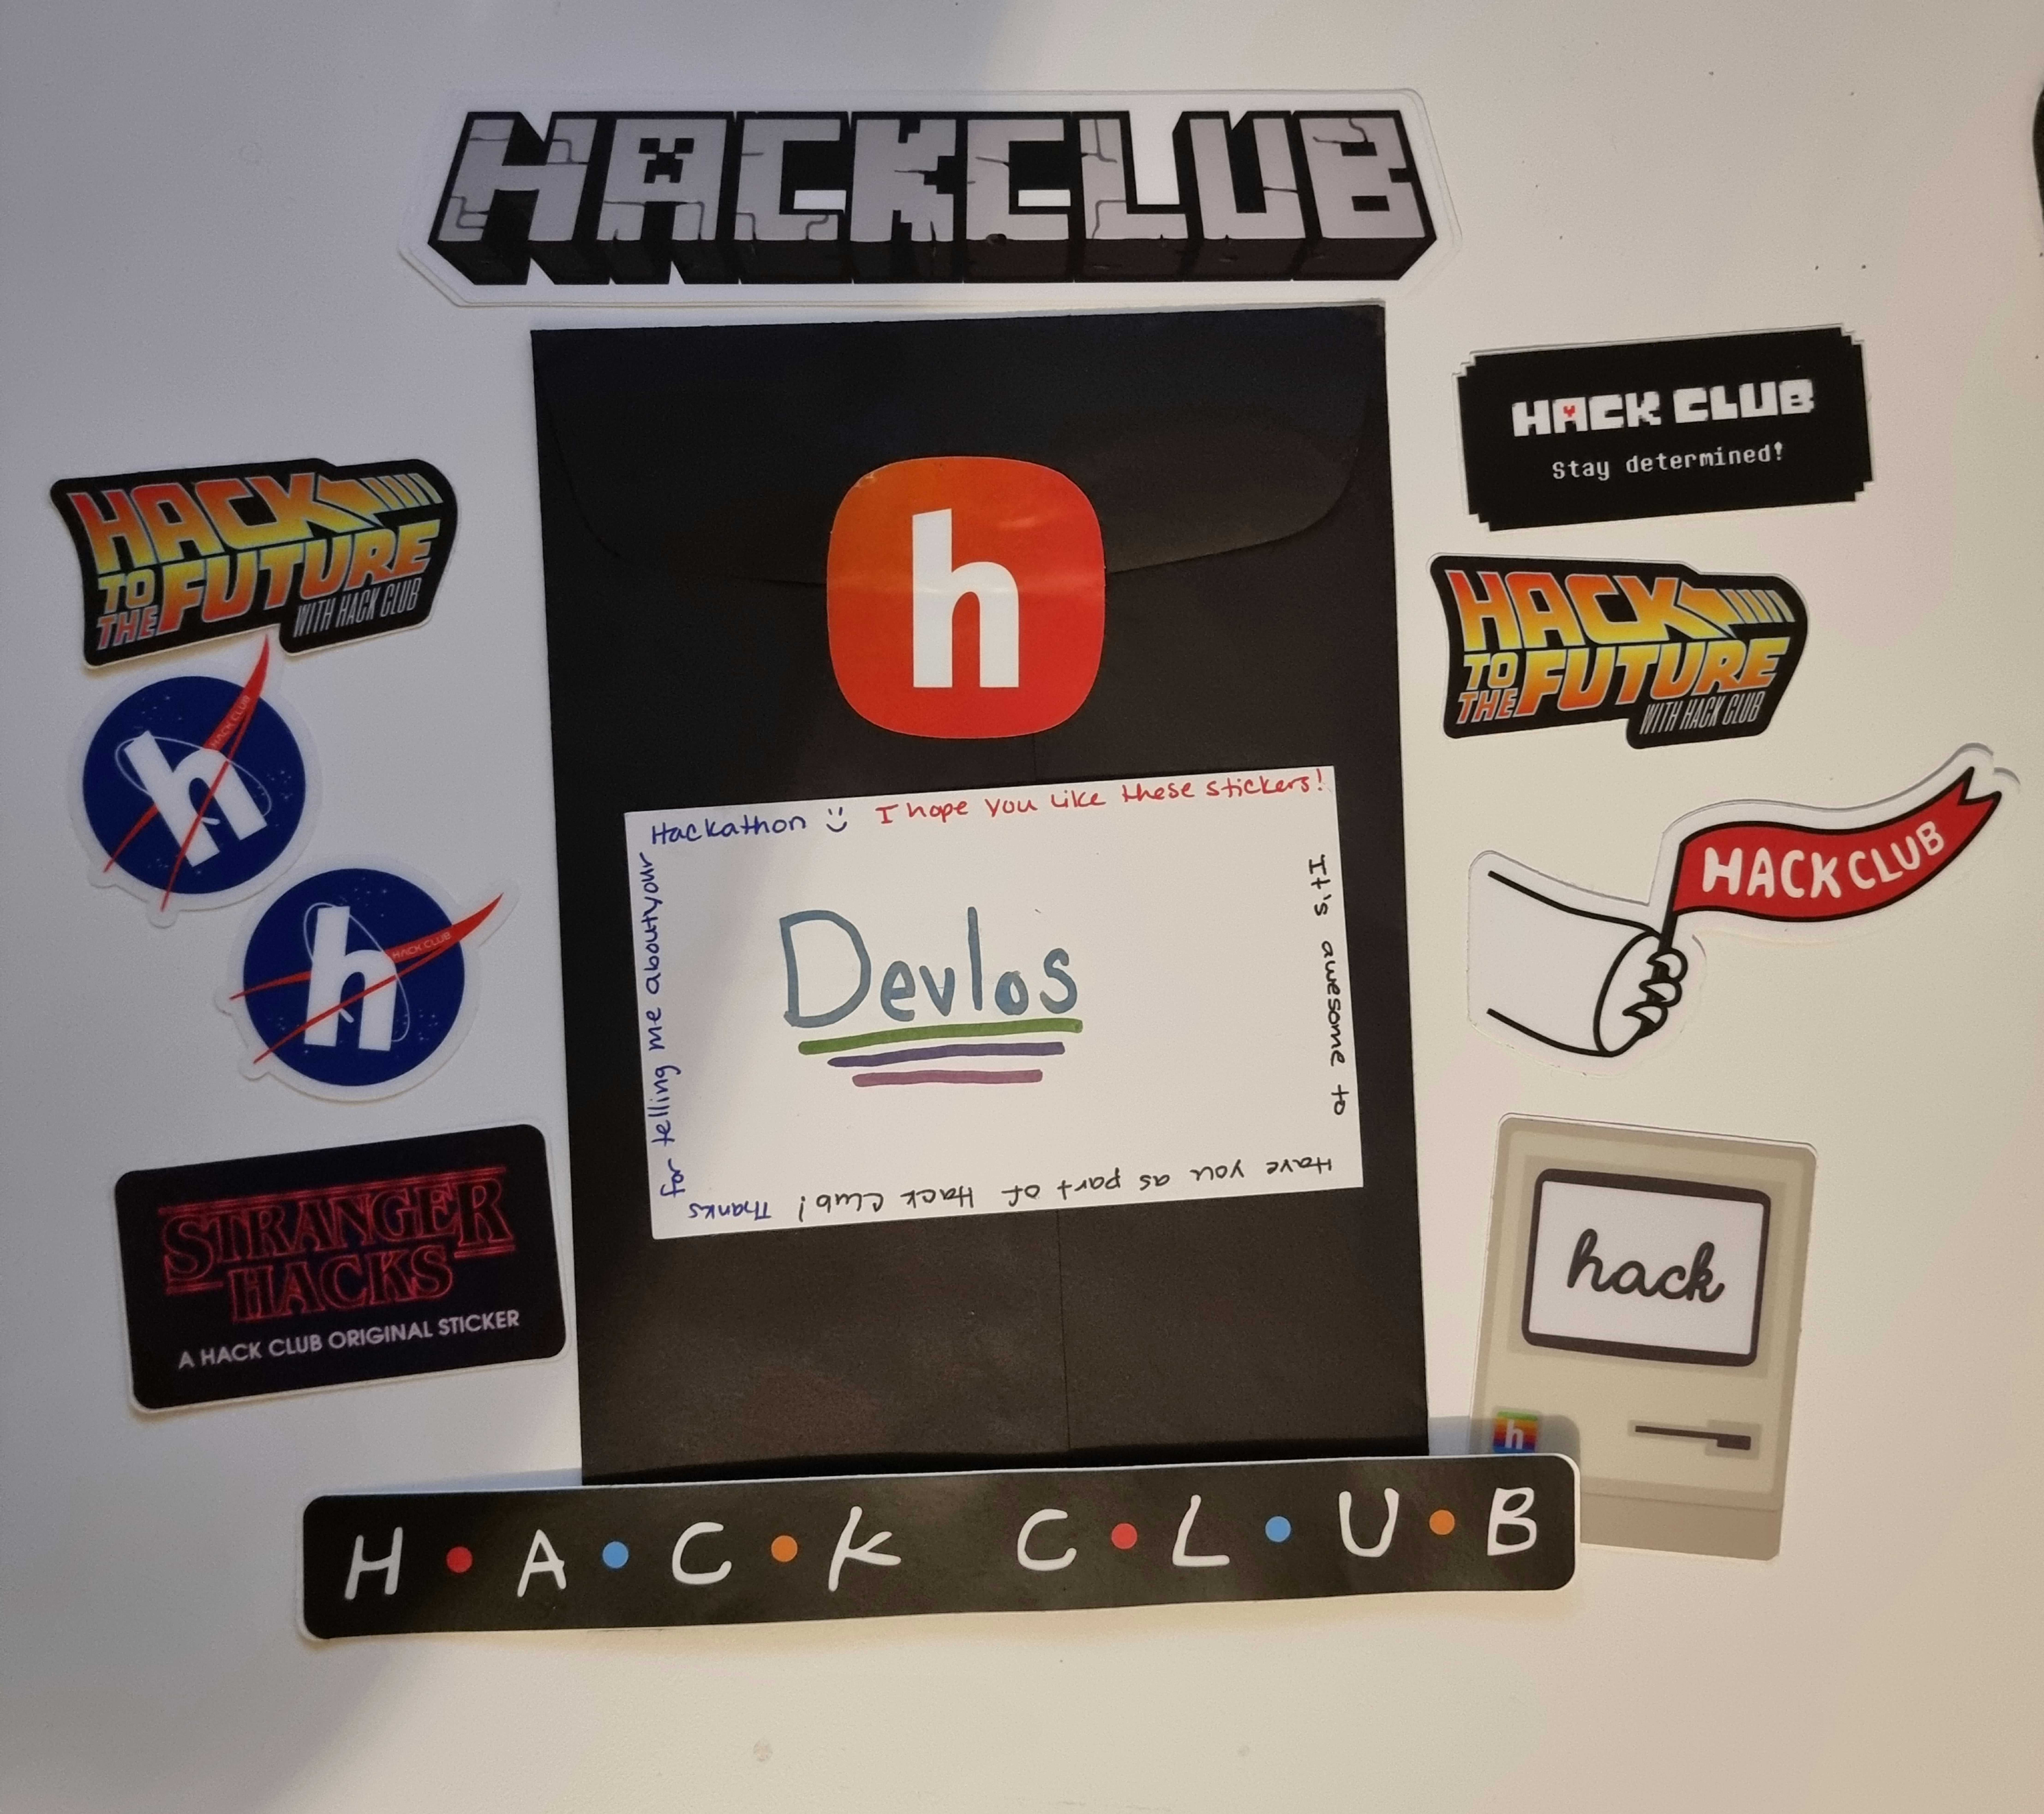 https://cloud-lj7x106x8-hack-club-bot.vercel.app/020221220_180637.jpg